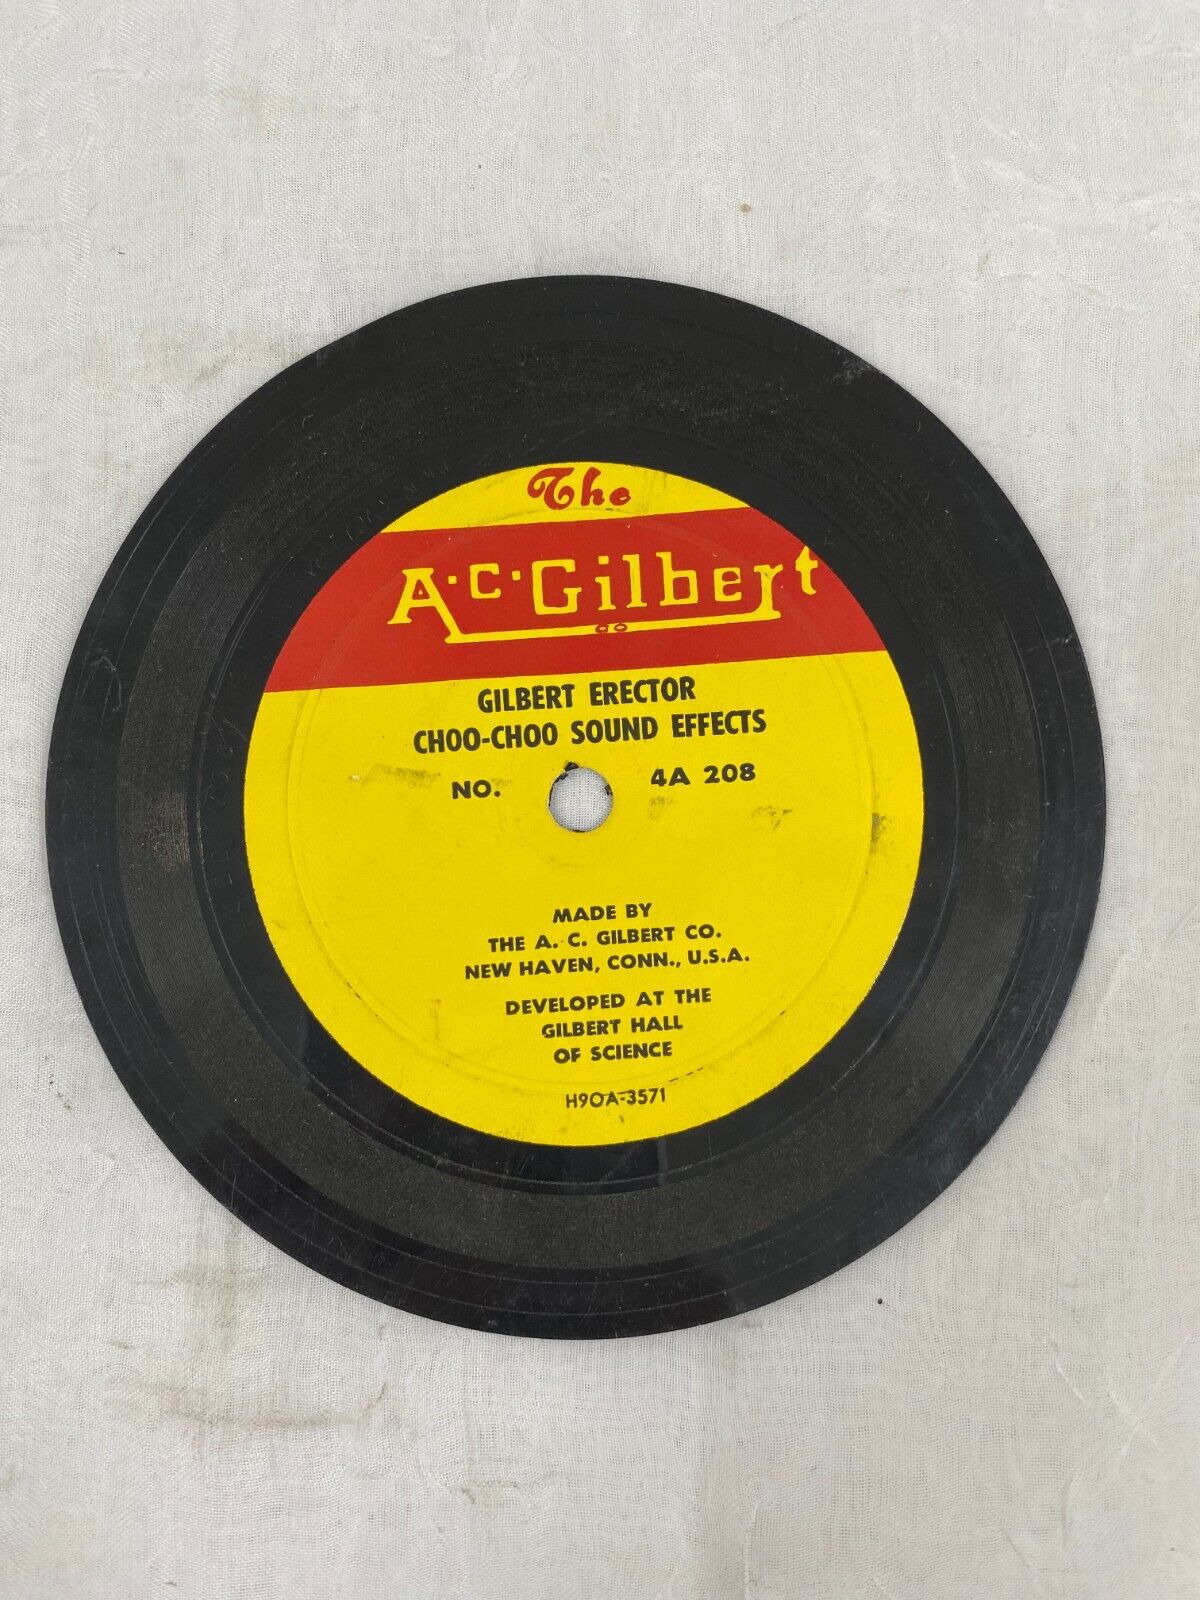 A.C. GILBERT ERECTOR CHOO-CHOO SOUND EFFECTS / AMUSEMENT PARK MUSIC 4A208 RECORD